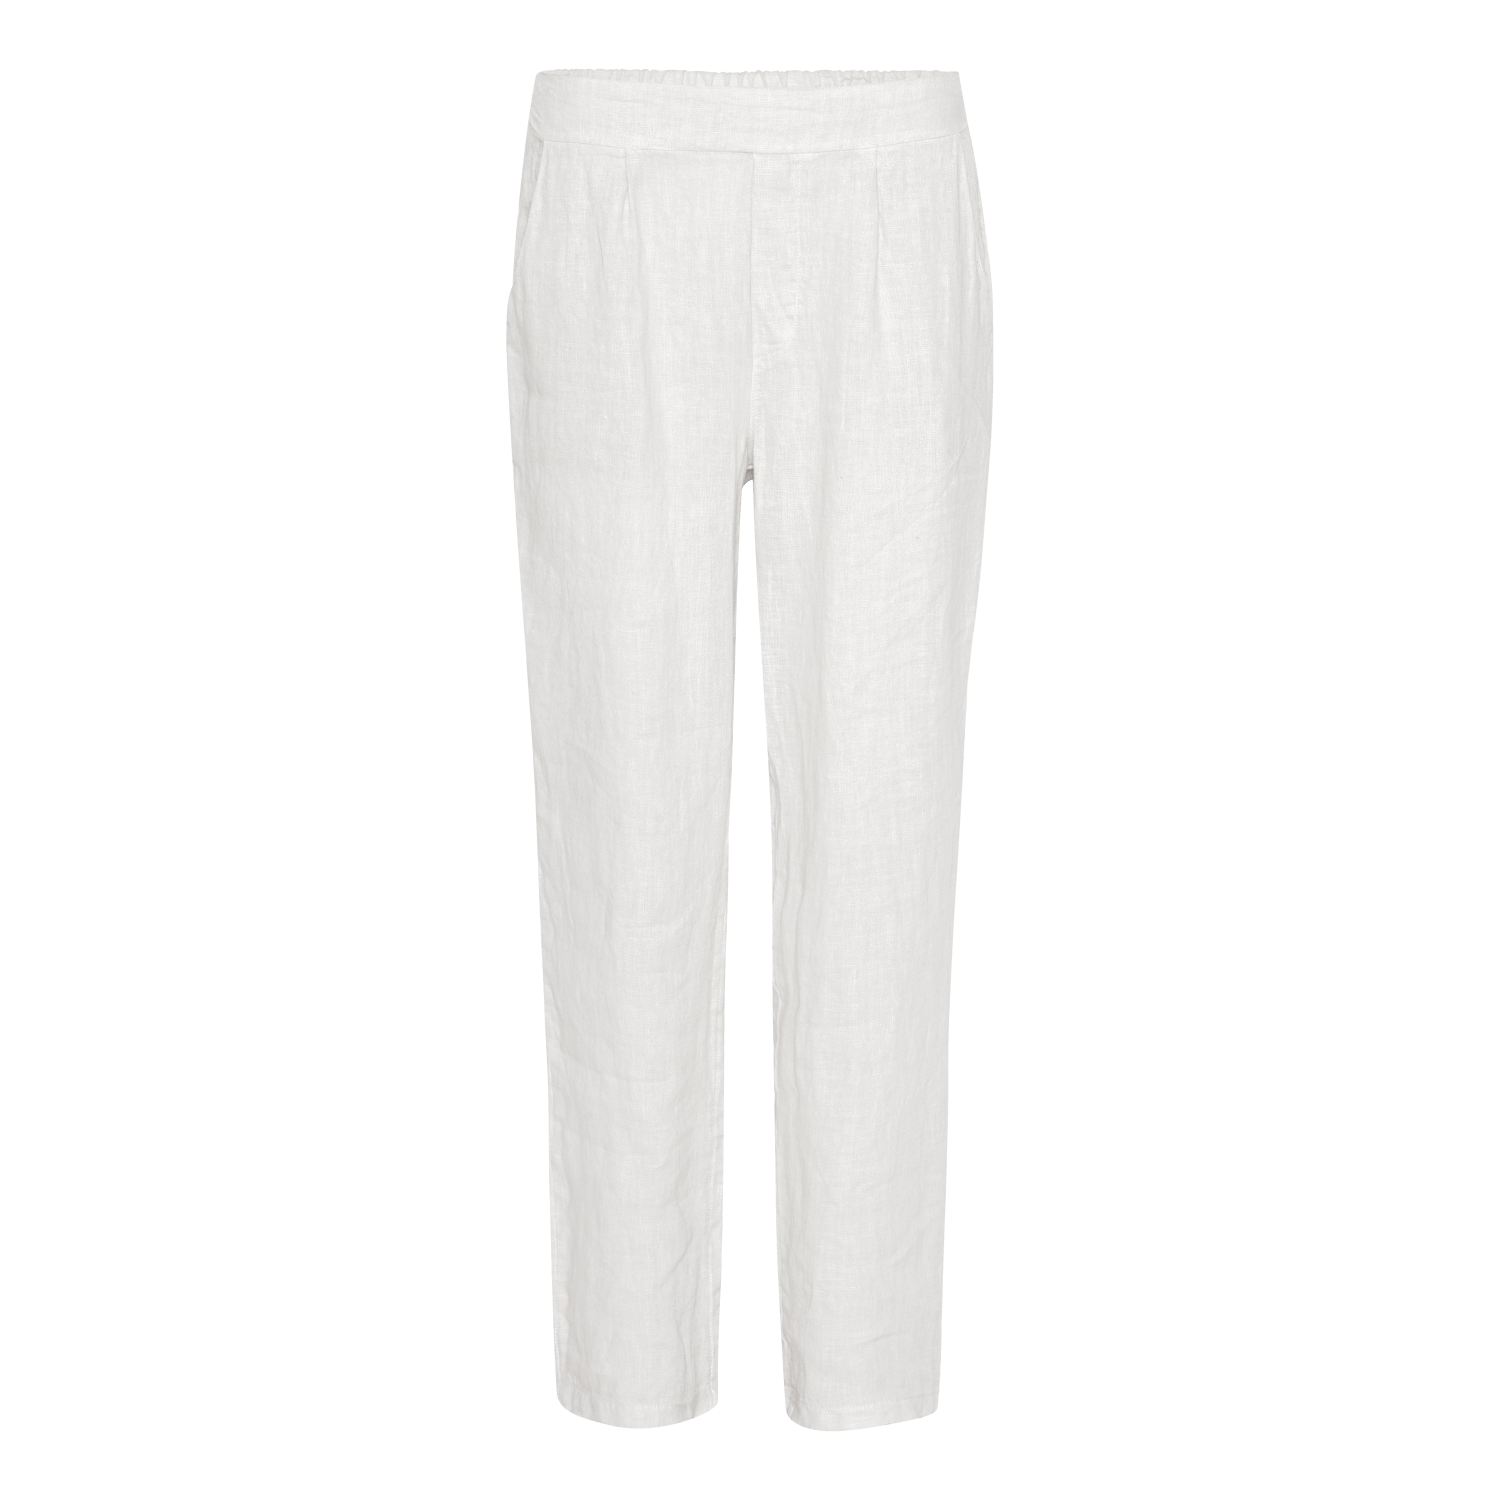 Linen Pants - White - Amaze Cph - White - S/M